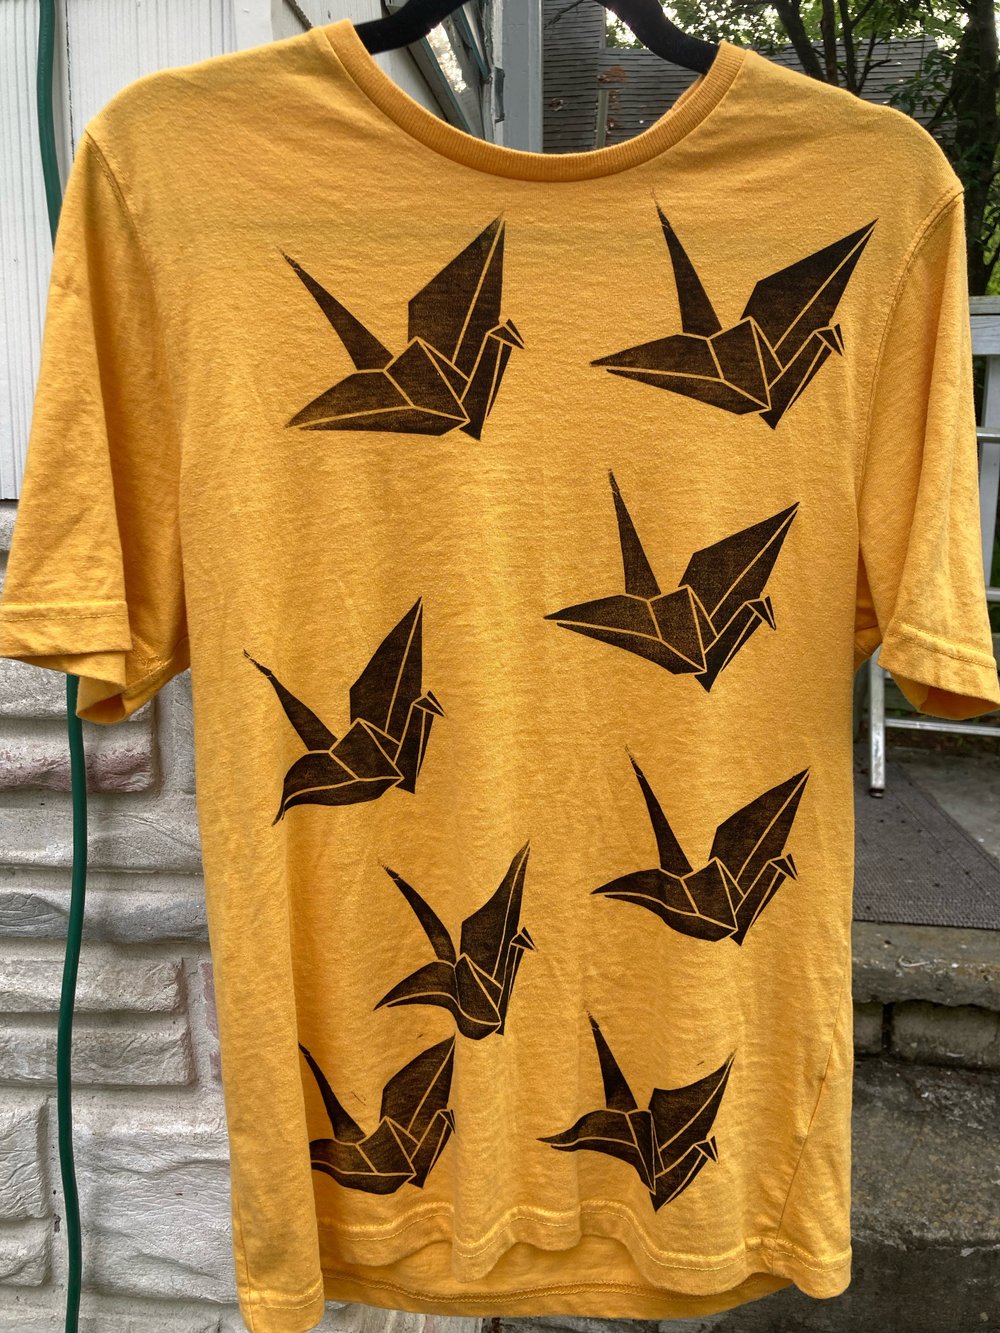 'Flock Of Cranes' Custom Blockprinted Tee (S Oneshot)